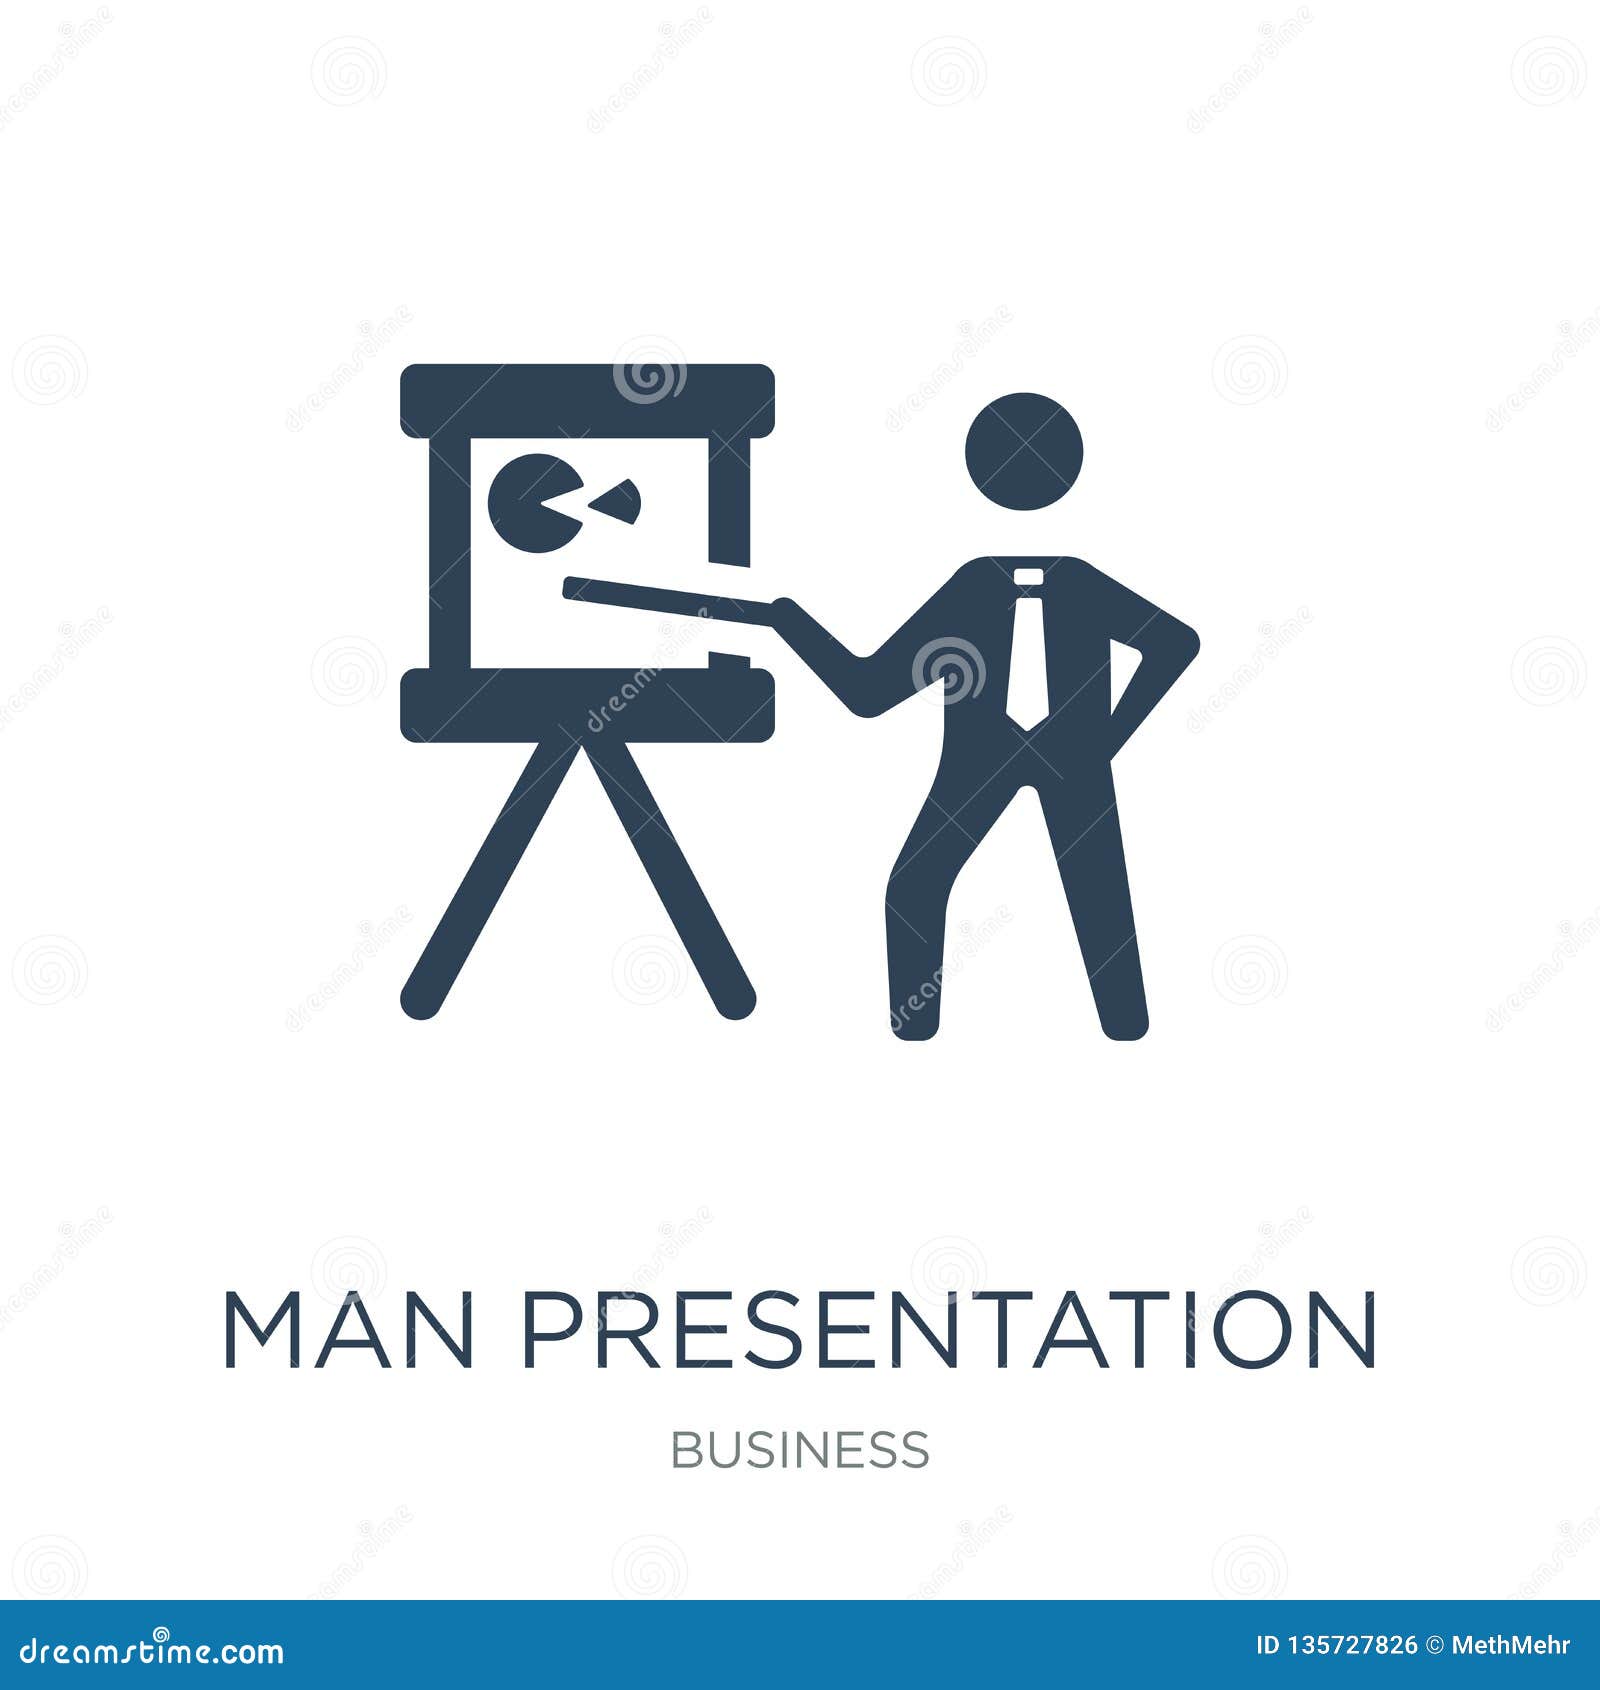 man presentation icon